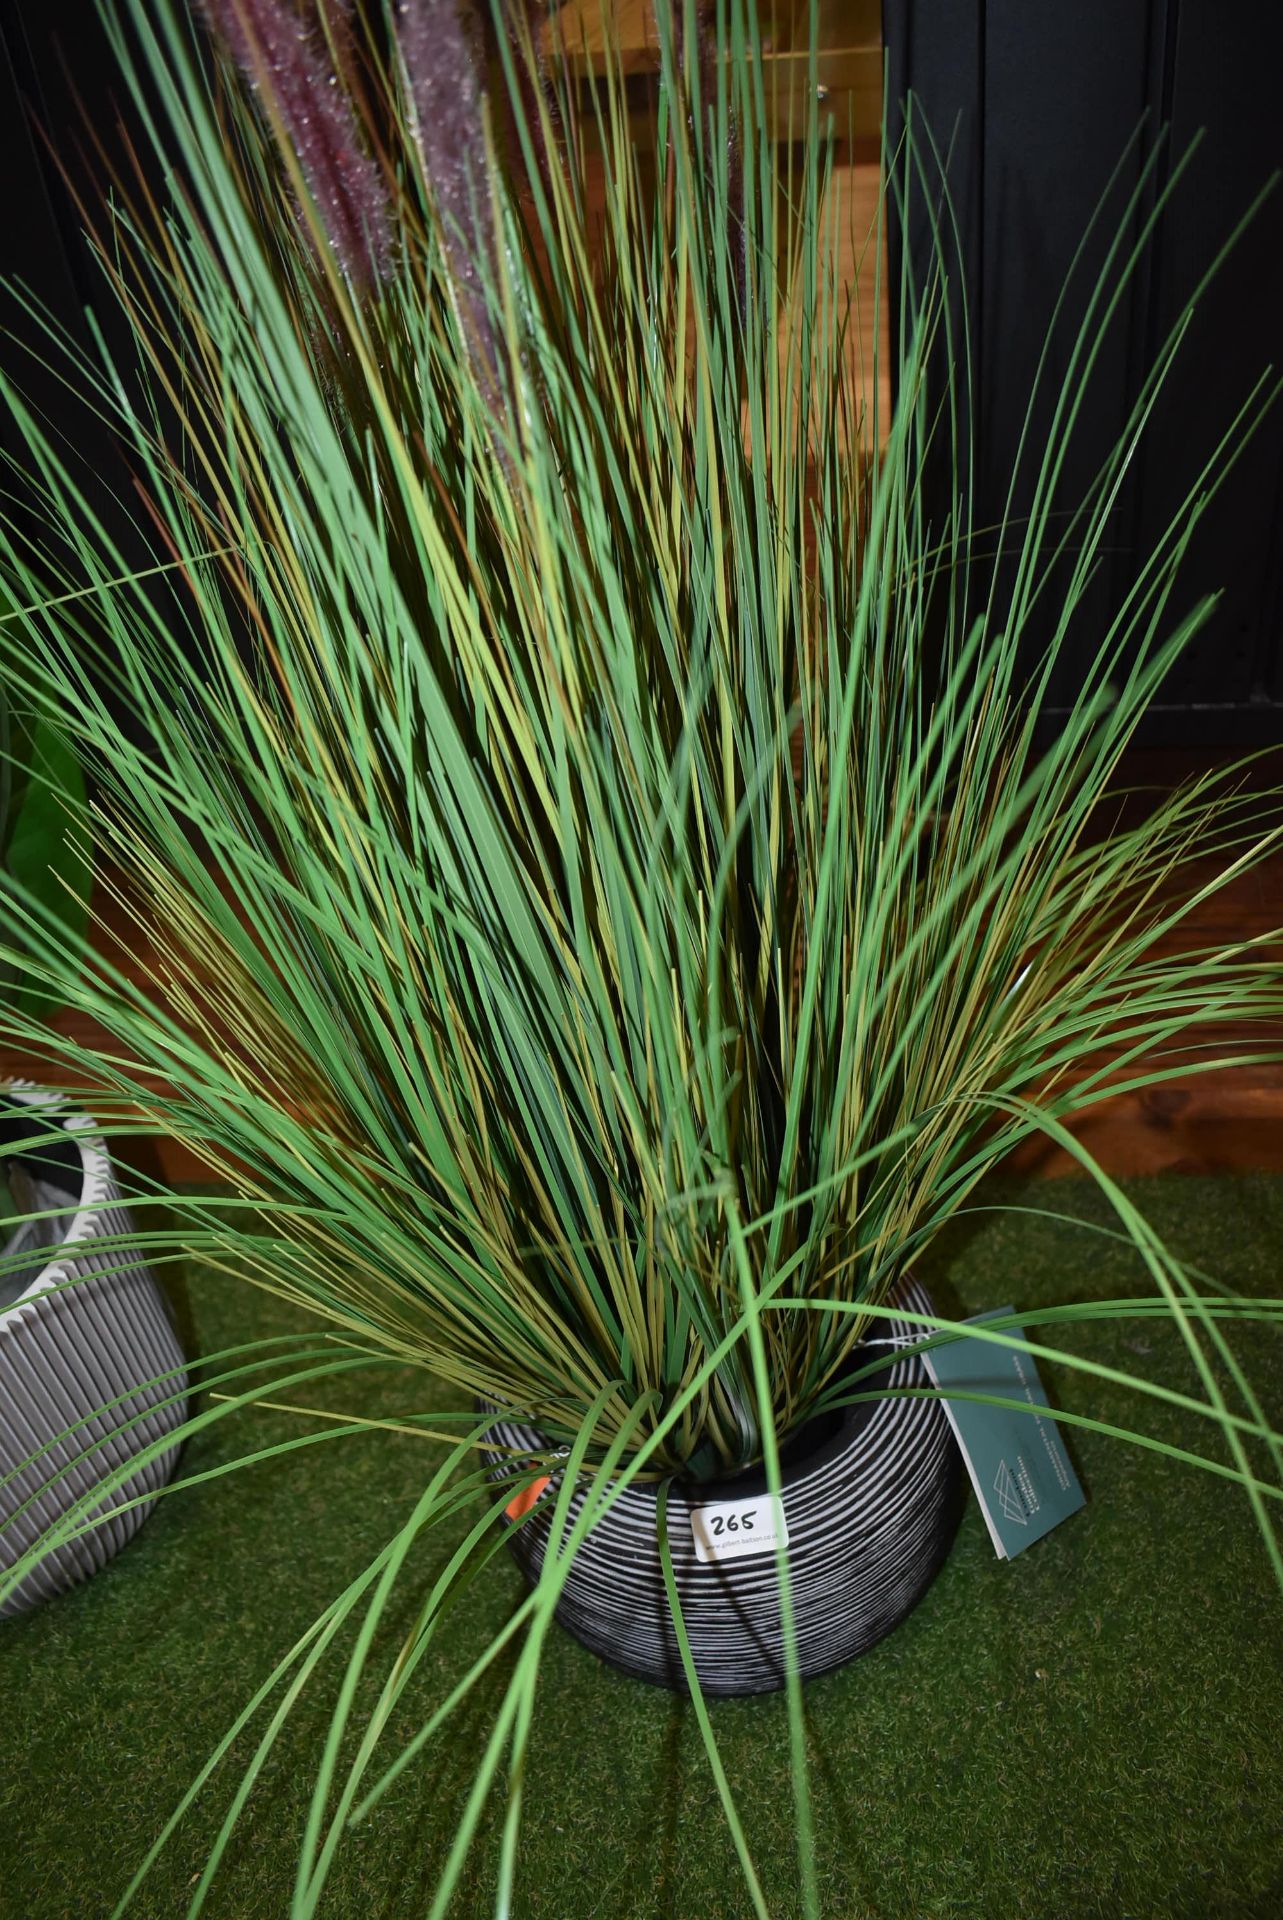 *Artificial Grass in Planter